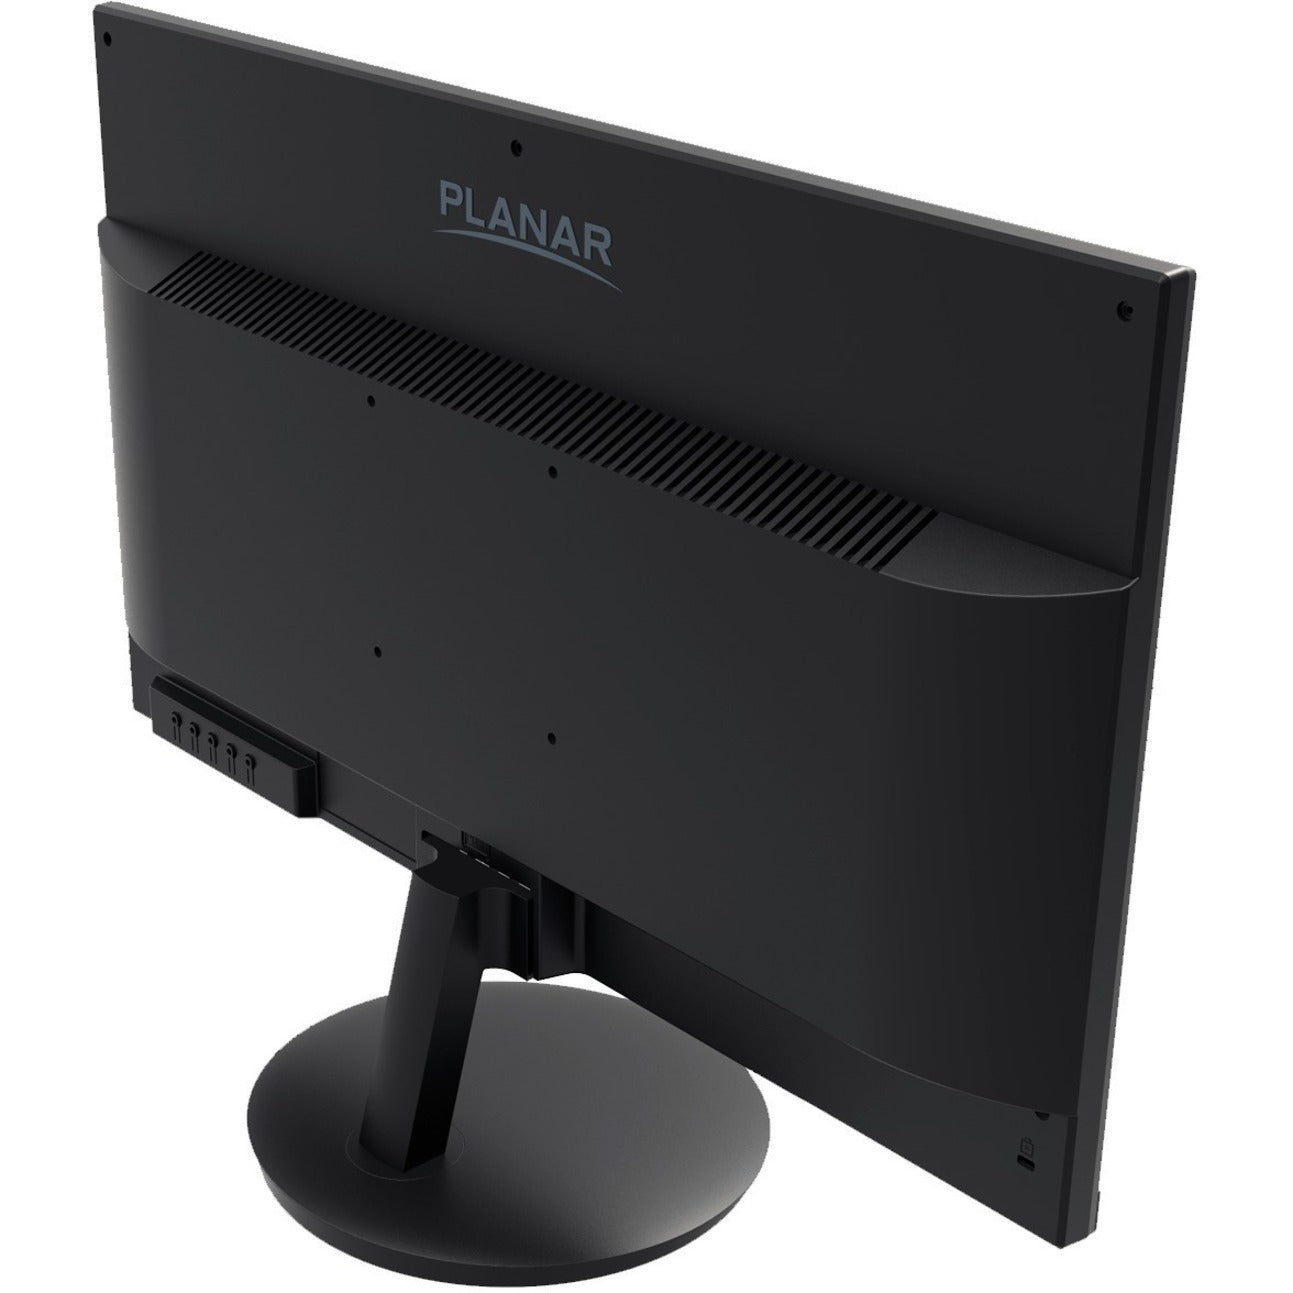 Planar 998-1330-01 PLN2400 Widescreen LCD Monitor, Full HD, 23.8", 16:9, Black